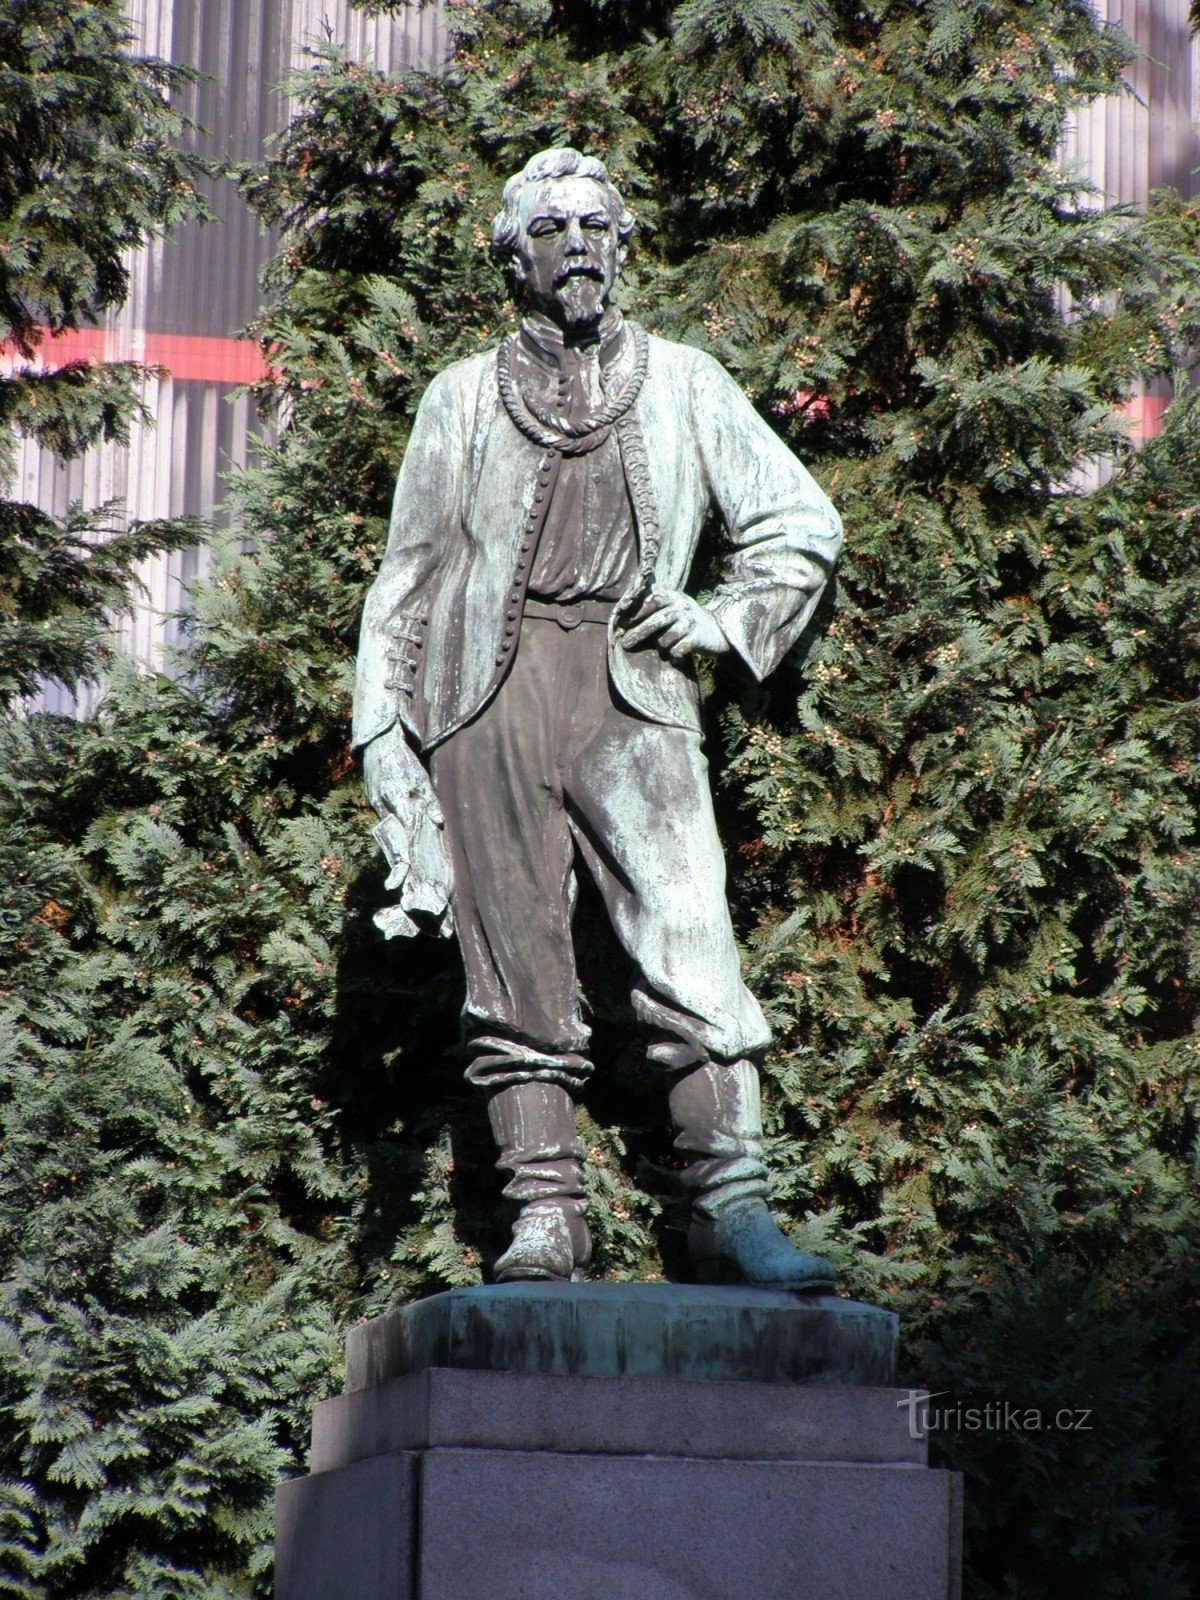 Turnov - monument to Dr. Miroslav Tyrš